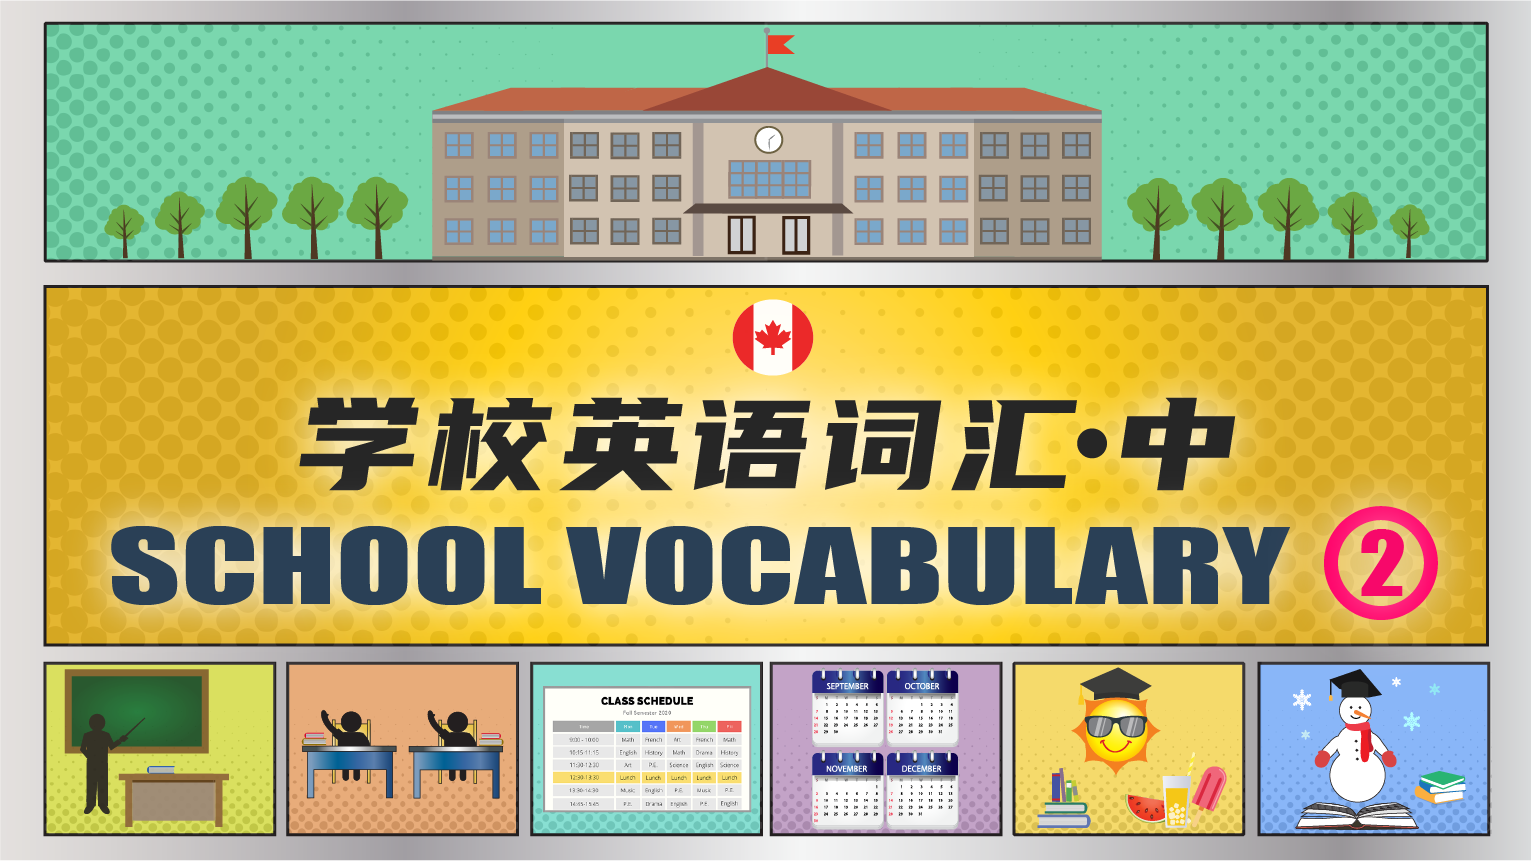 School Vocabulary - Part 2